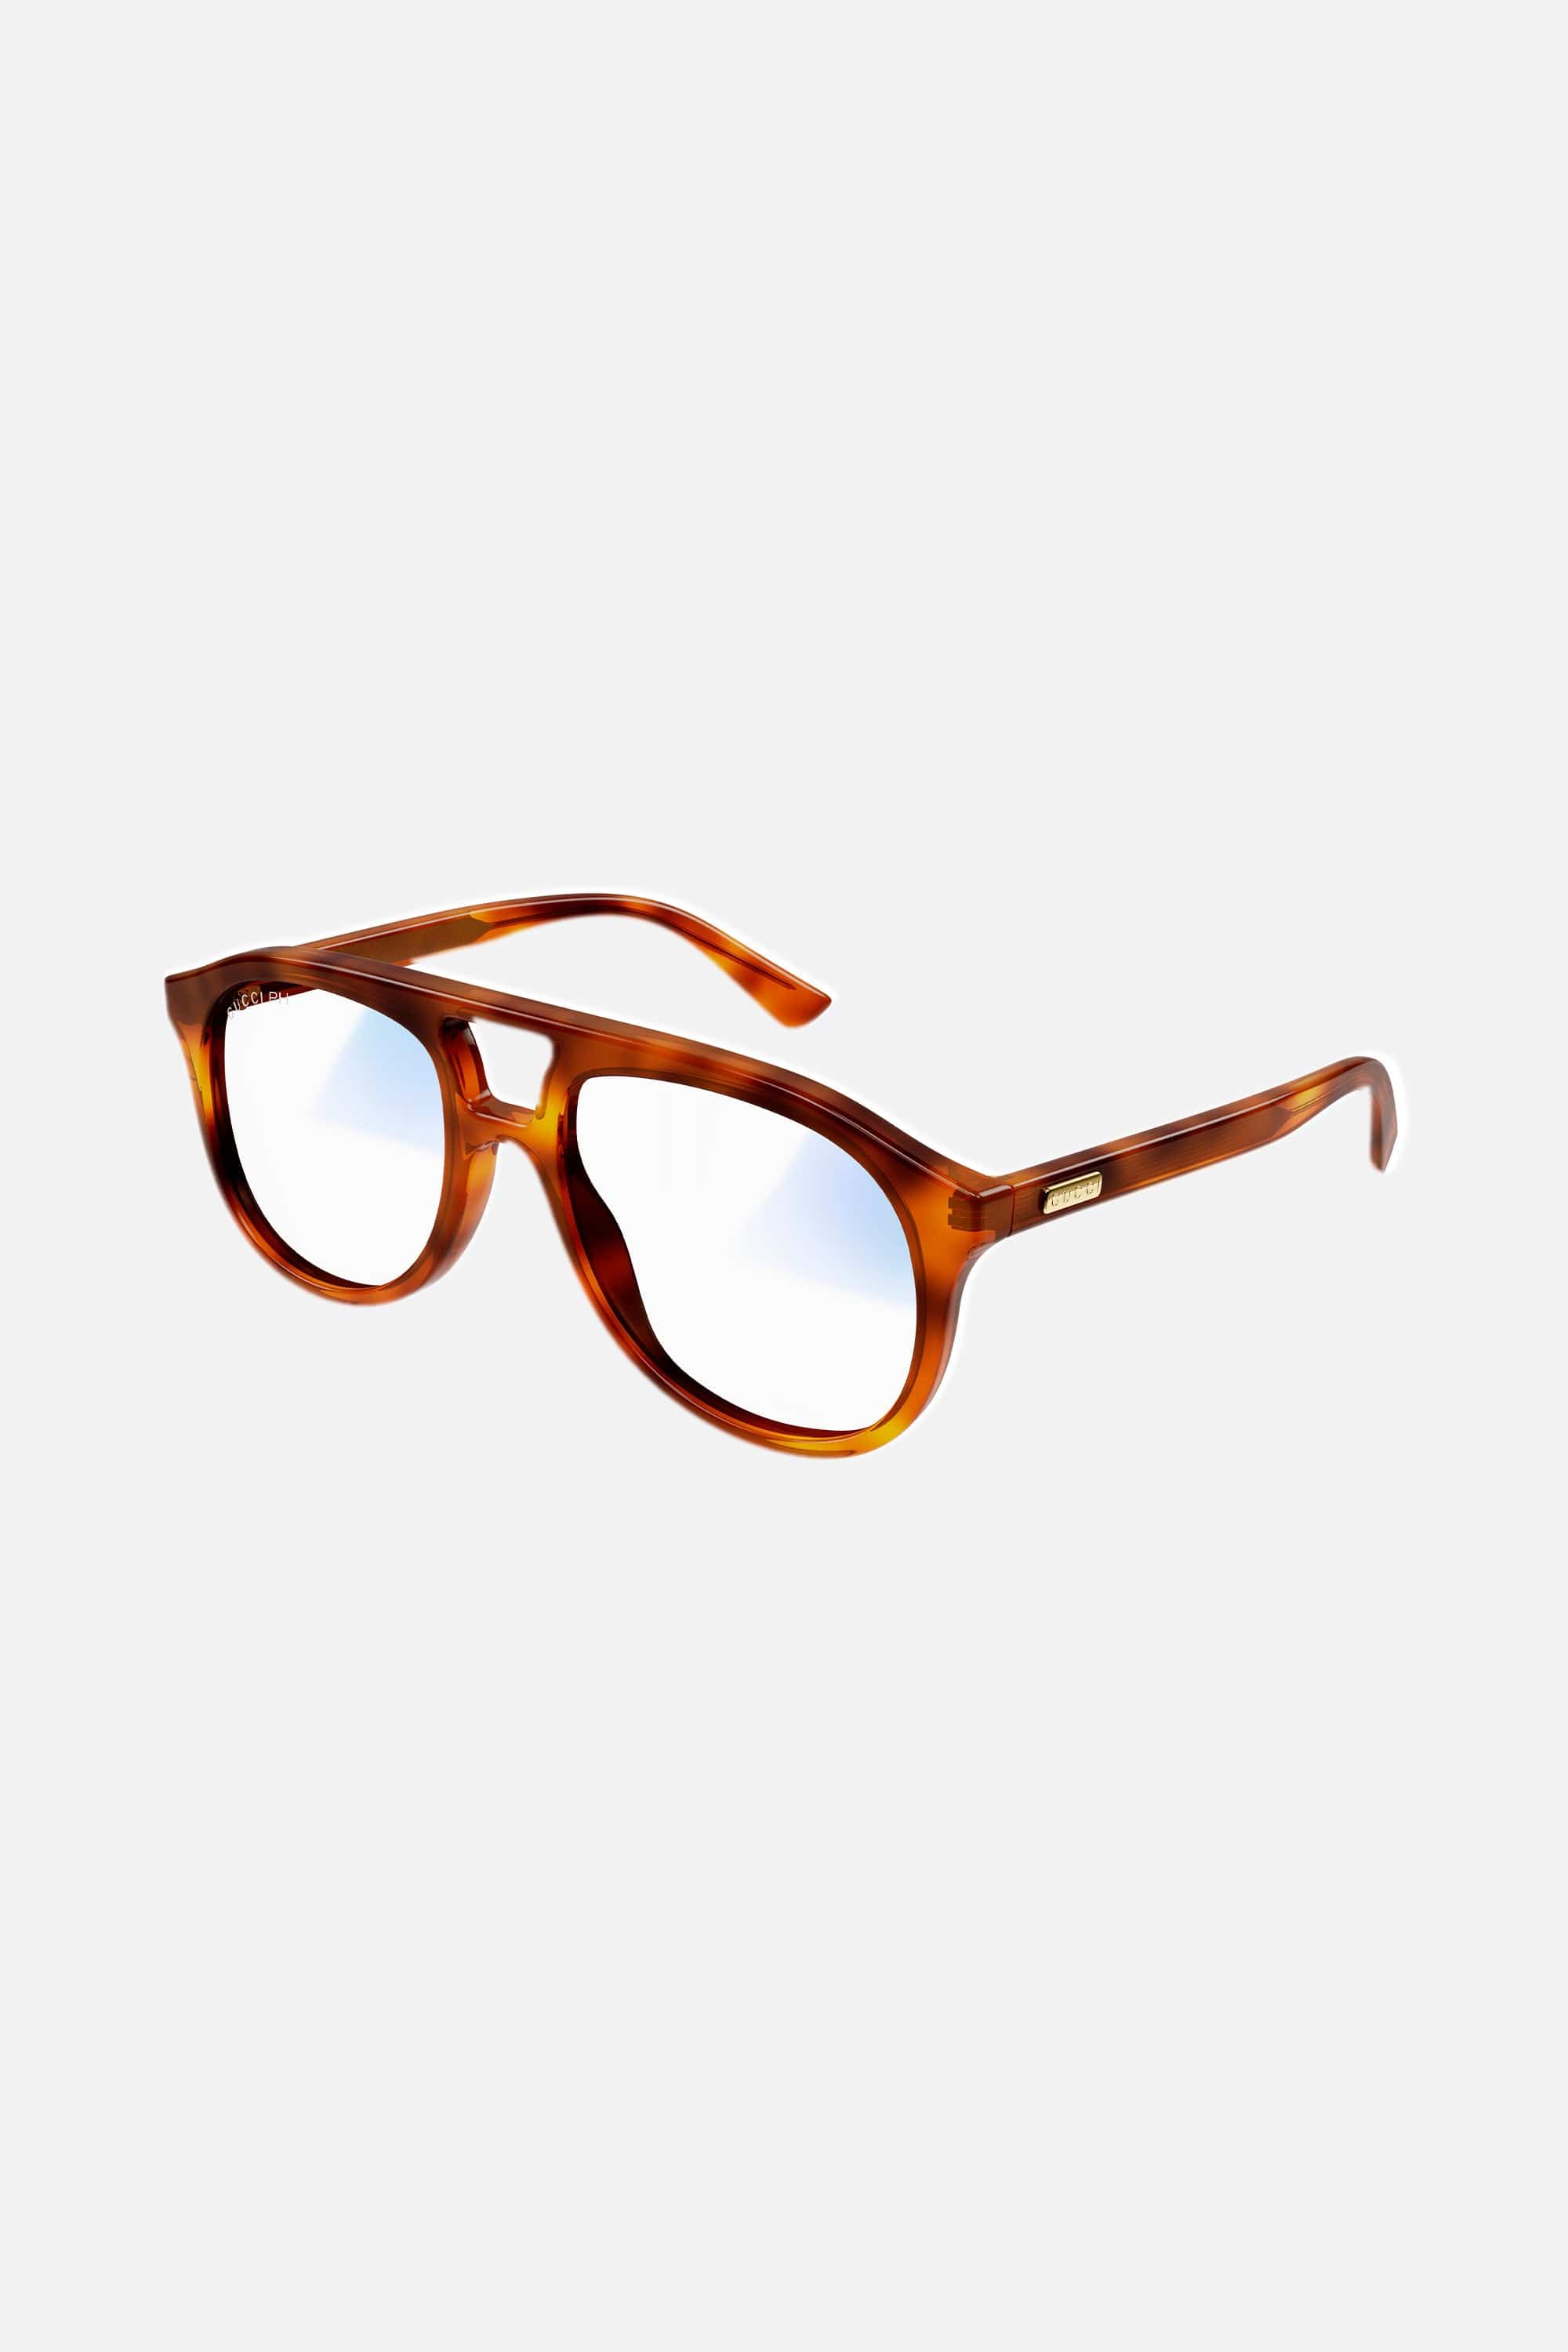 Gucci GG1320s pilot brown acetate blue light sunglasses - Eyewear Club